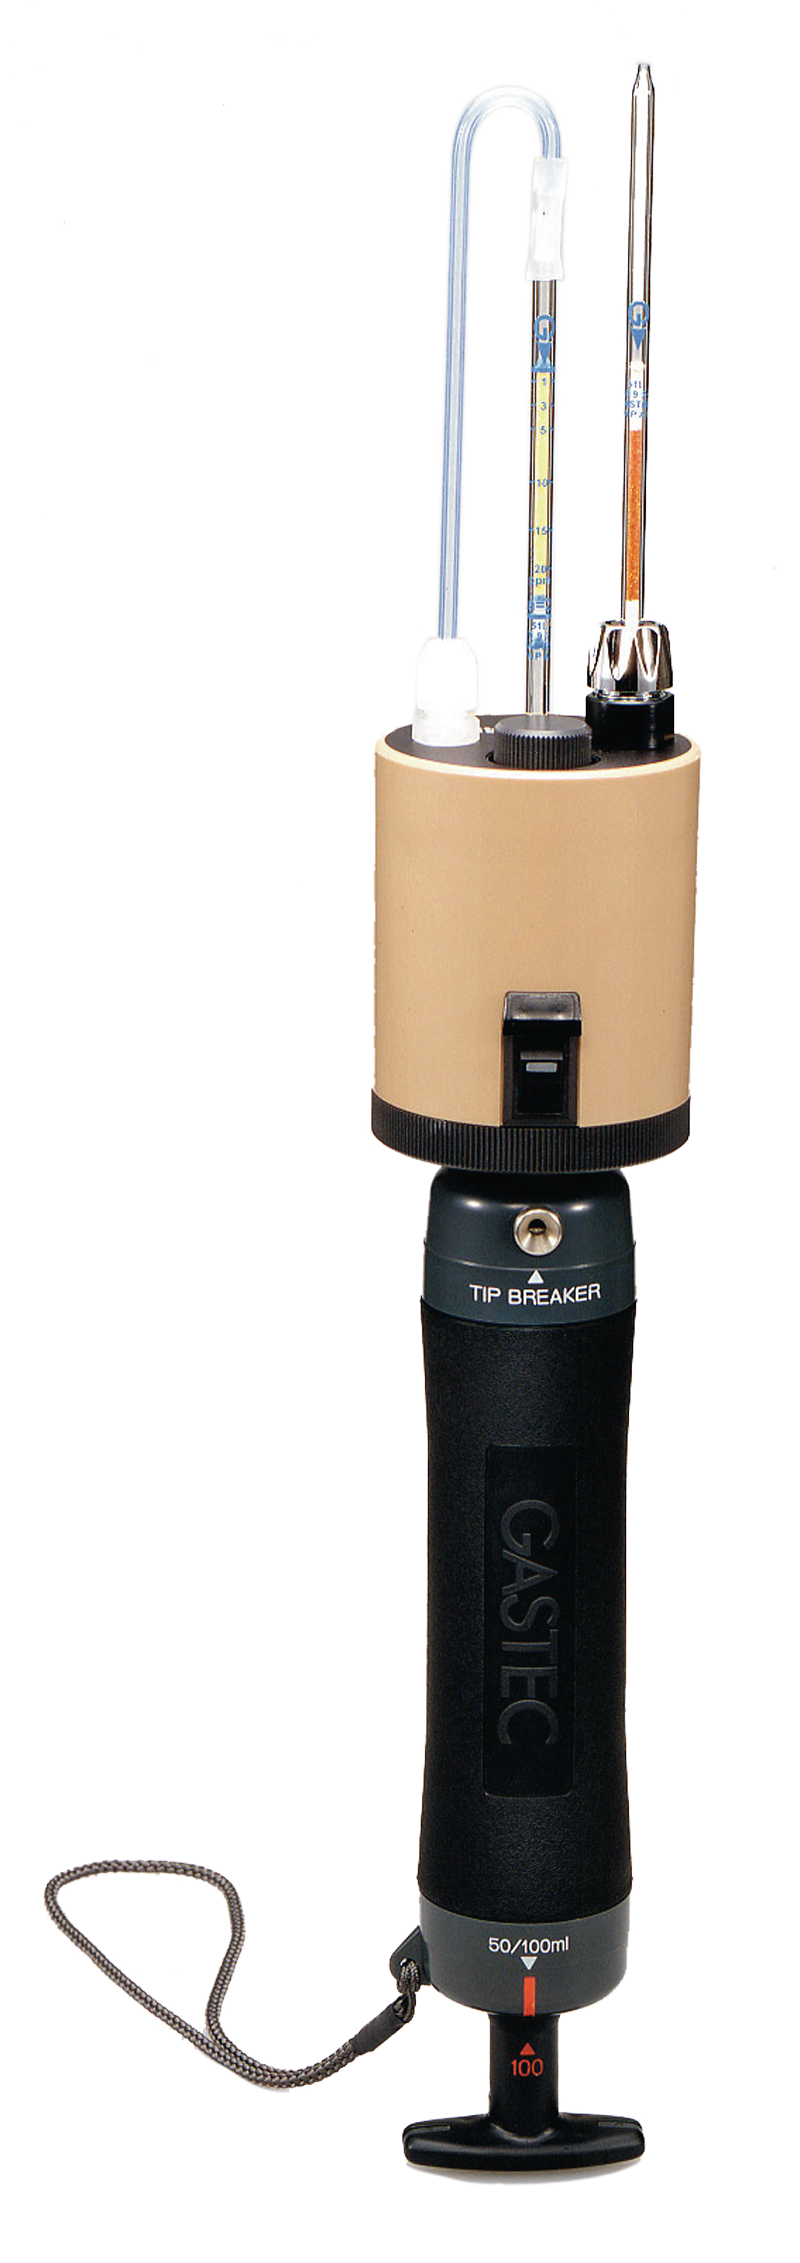 A Gastec pyrotec pyrolyzer attached to a Gastec® GV100 sampling pump.